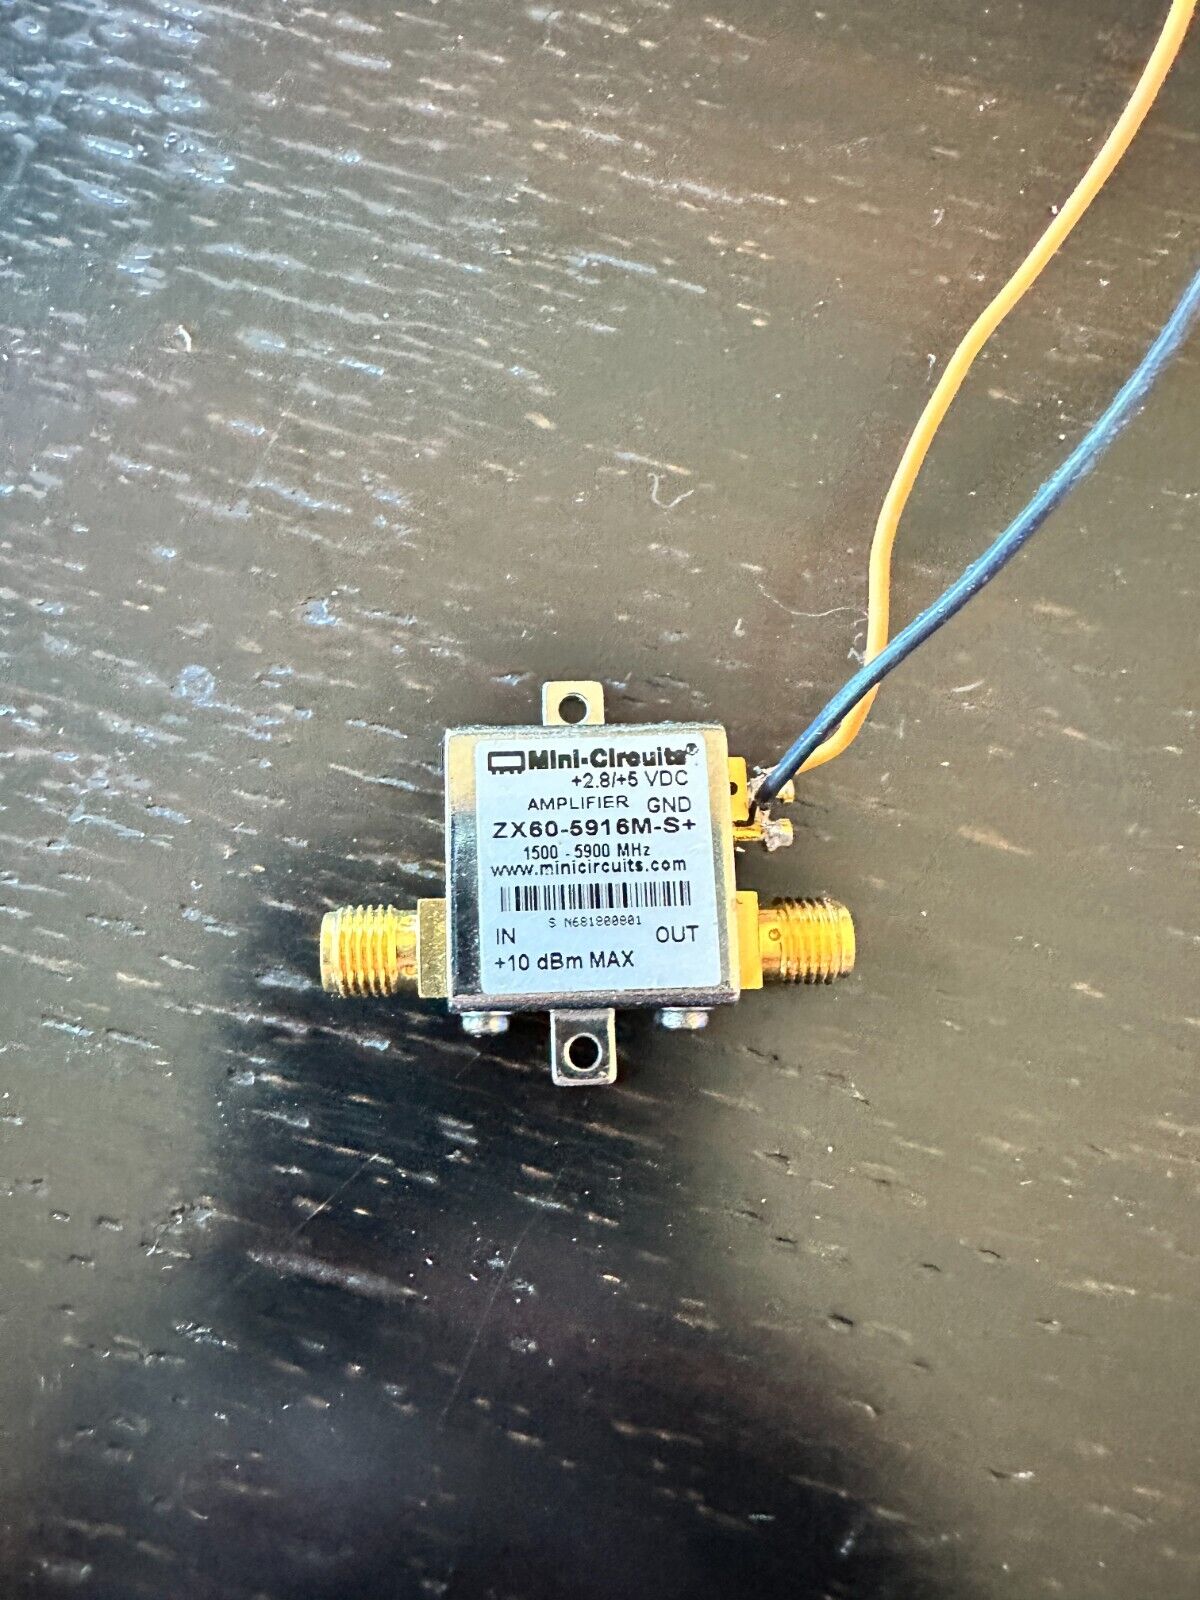 Mini-Circuits zx60-5916m-s+ Amplifier